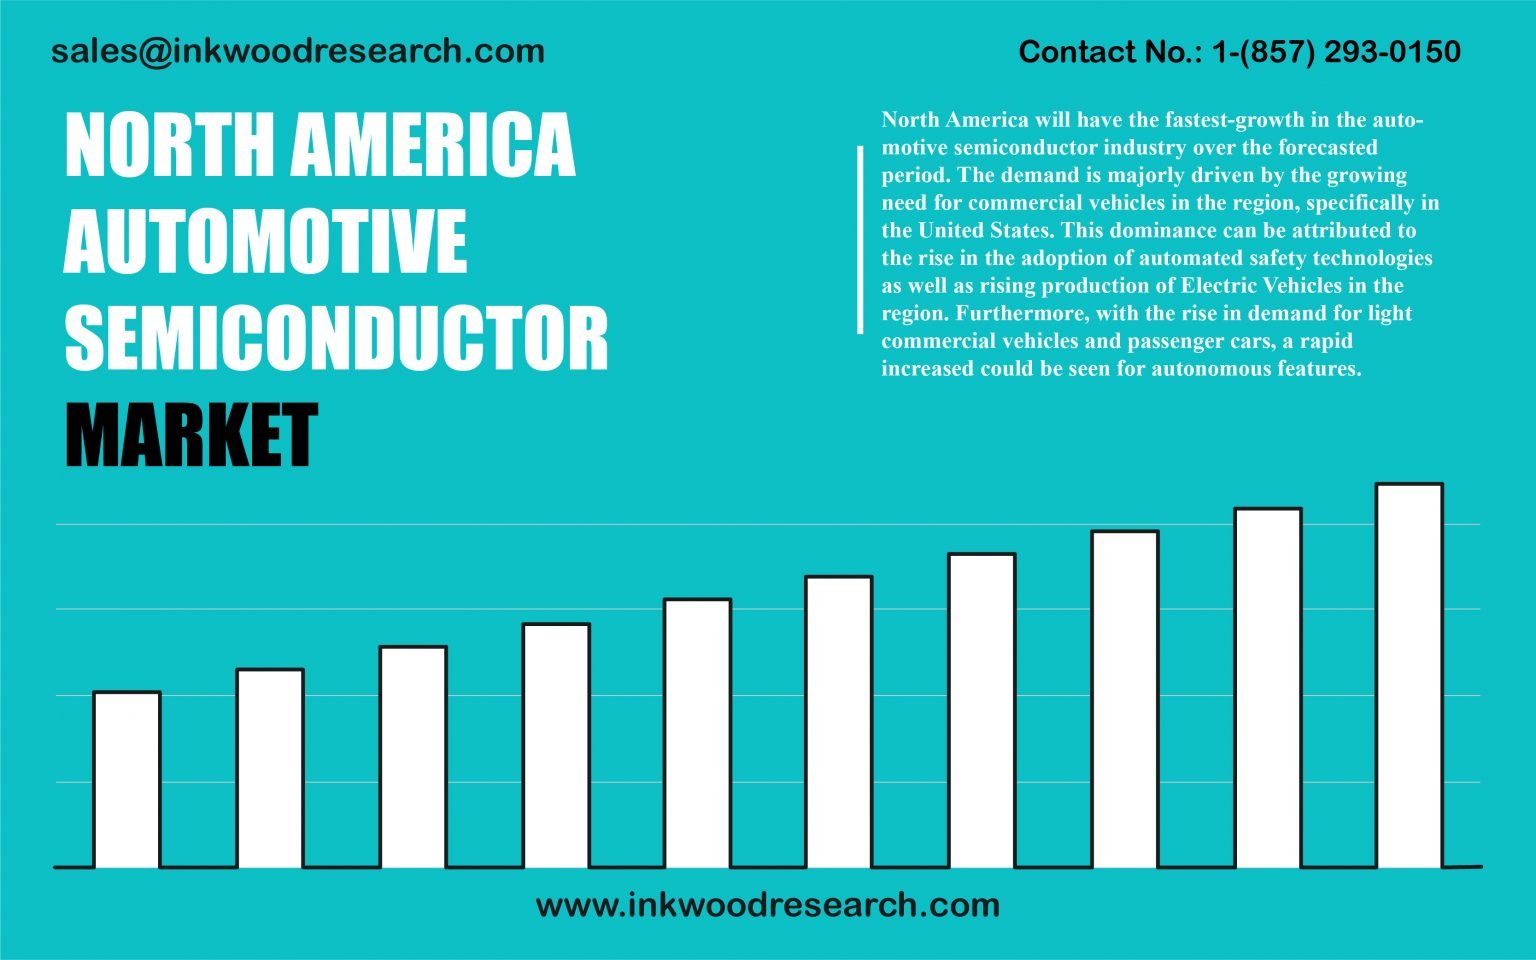 North America Automotive Semiconductor Market Growth